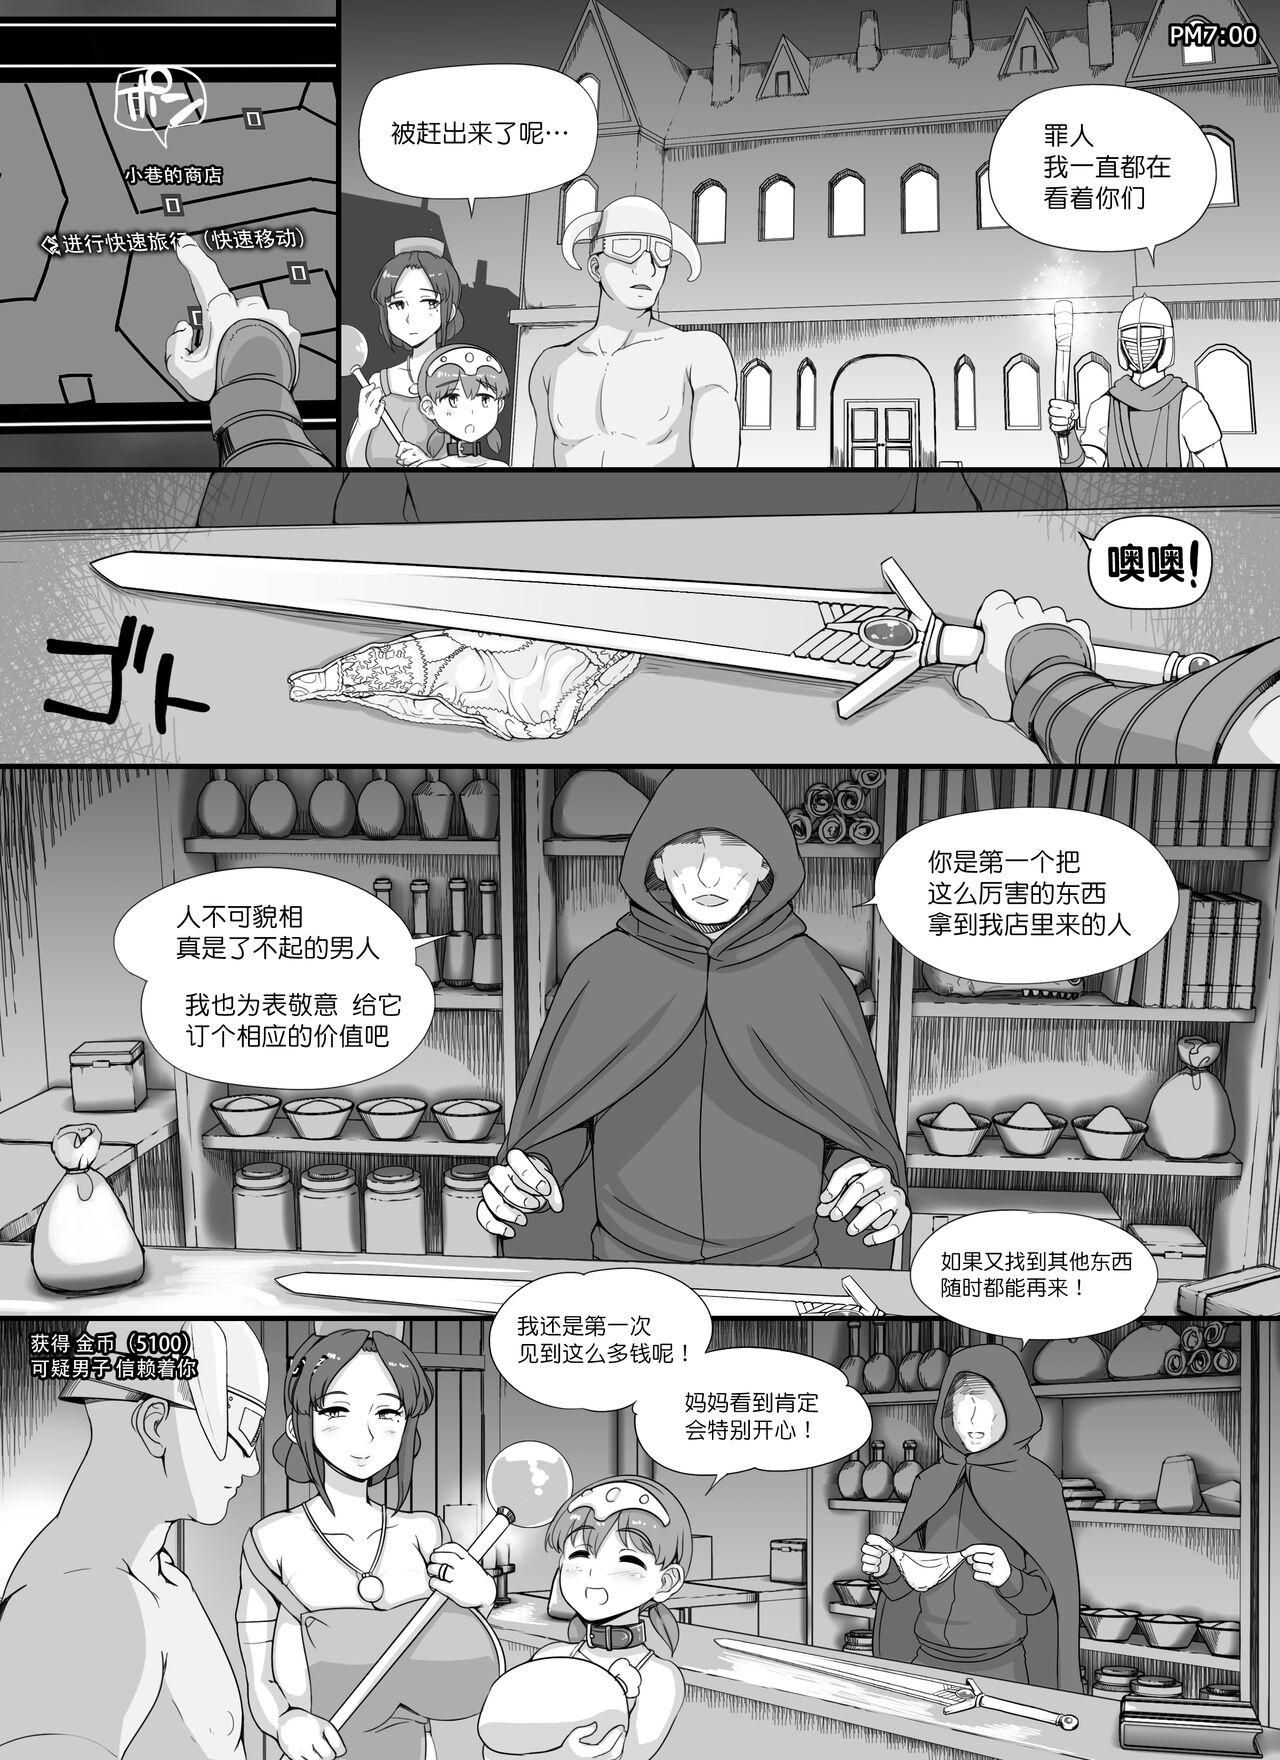 Mamadas NPC Kan MOD 2 - The elder scrolls Cartoon - Page 51